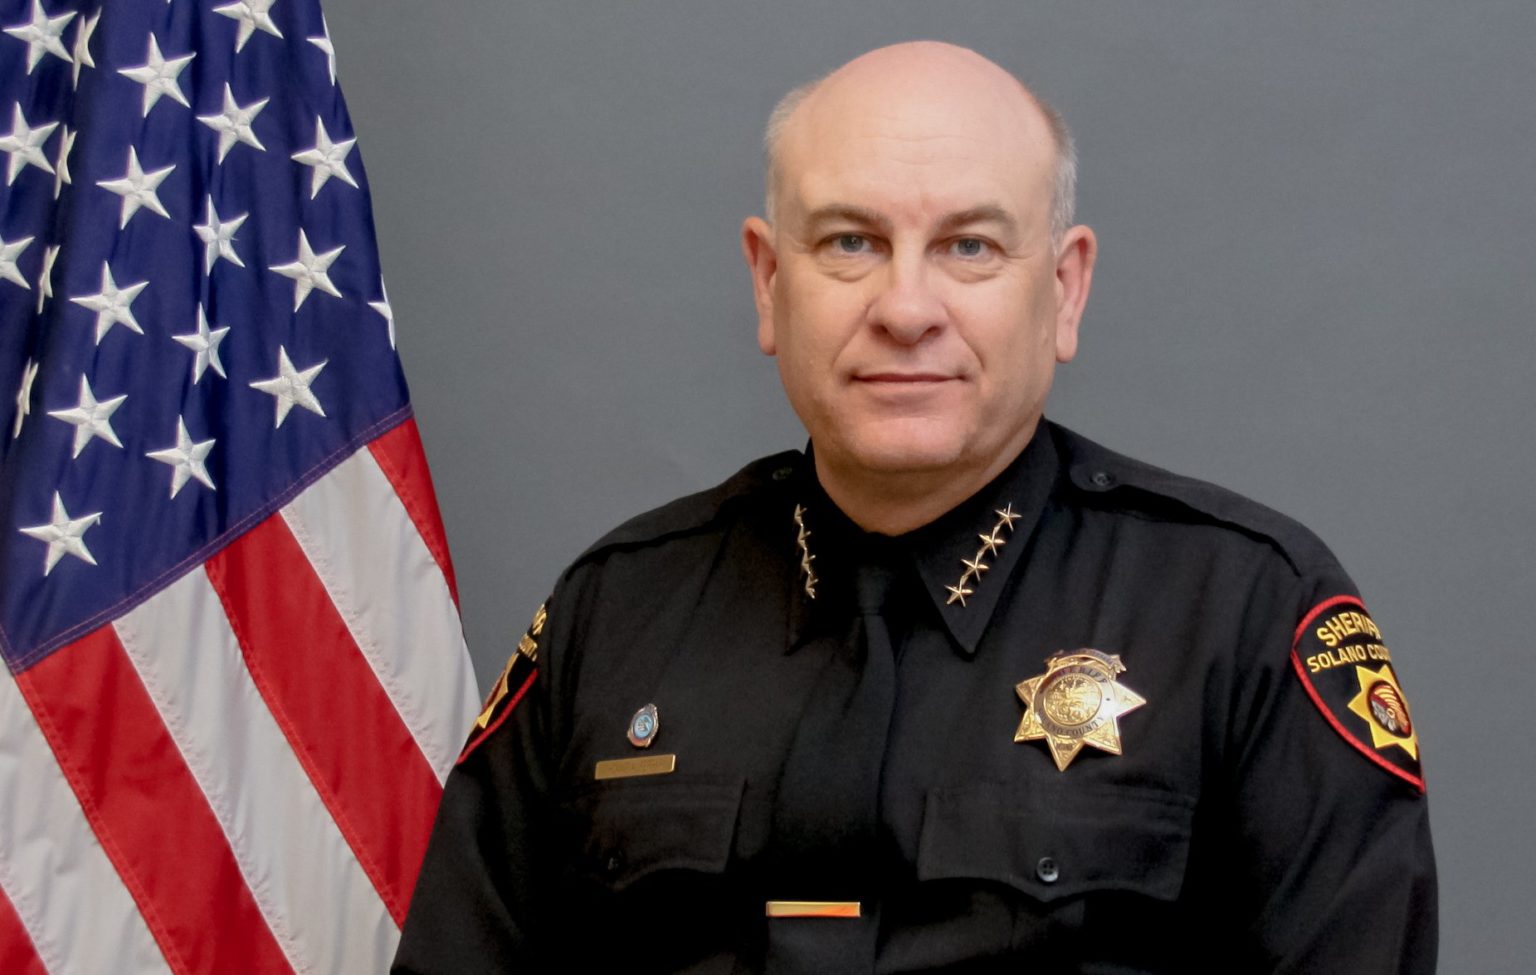 Larry Williams - Deputy Sheriff - East Baton Rouge Sheriff's Office